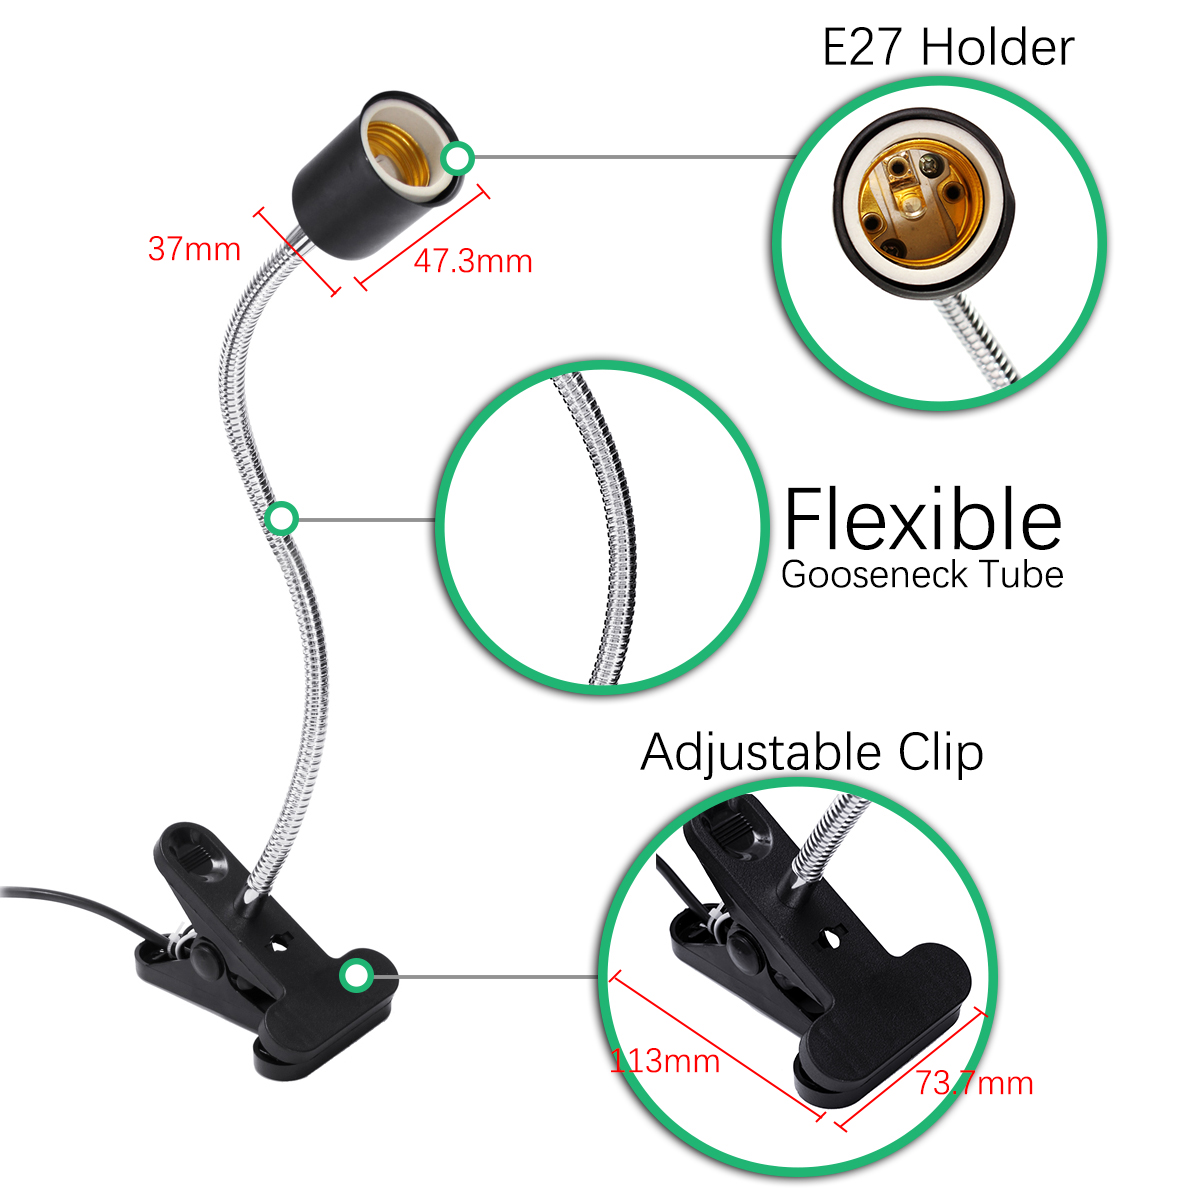 10CM-E27-Flexible-Pet-LED-Light-Lamp-Bulb-Adapter-Holder-Socket-with-Clip-On-Off-Switch-EU-US-Plug-1309591-9